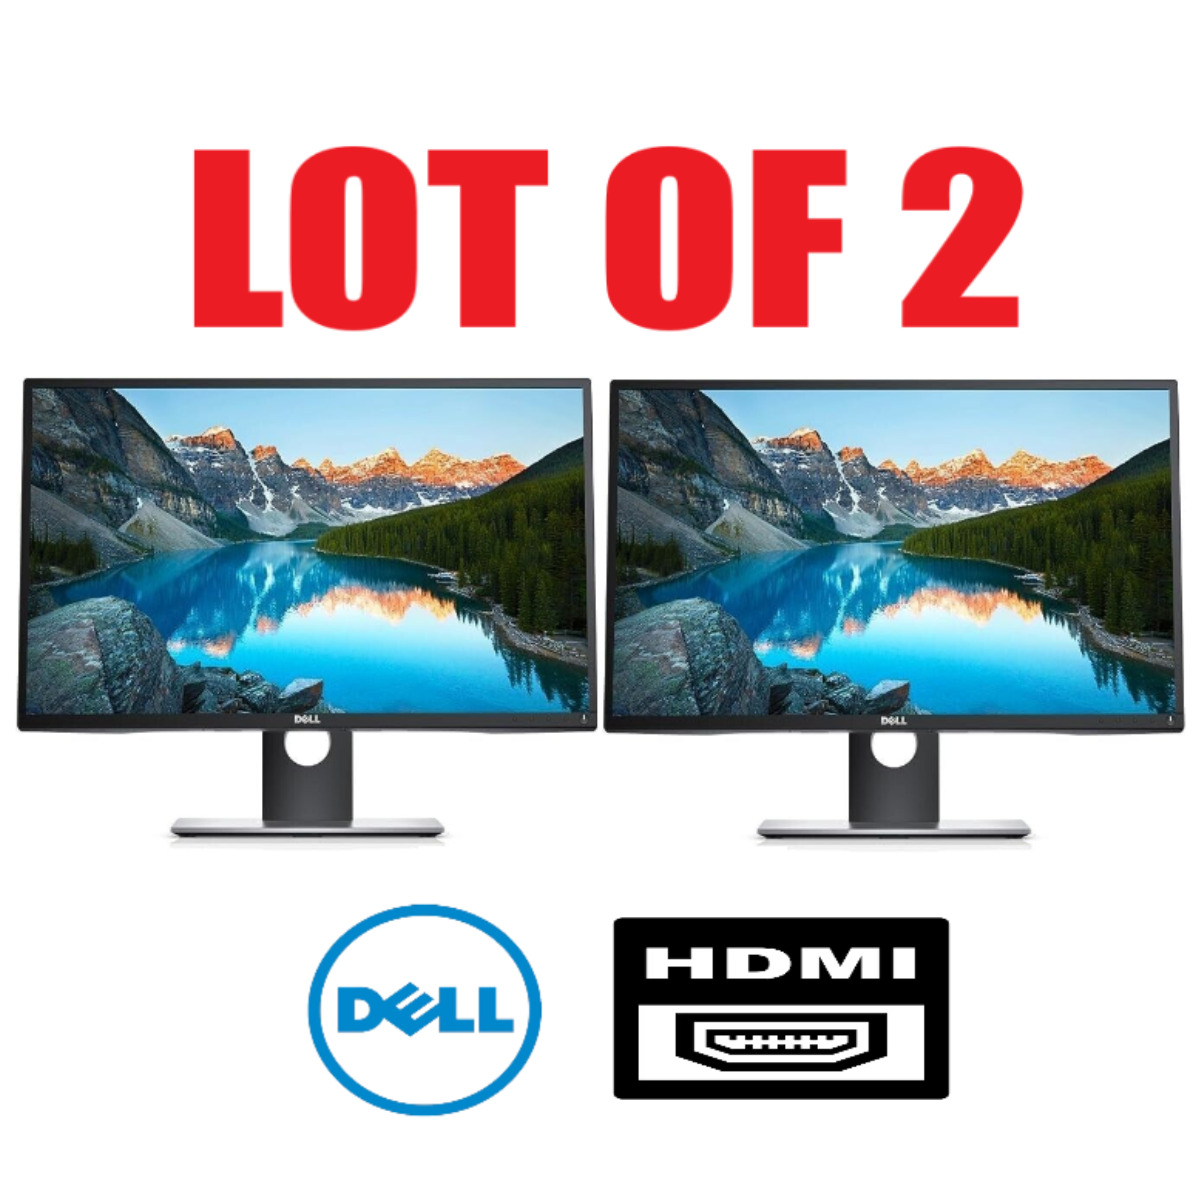 LOT 2 Dell P2217H 22in Full HD IPS LED Monitor 1080p Backlit USB 3.0 HDMI USB3.0